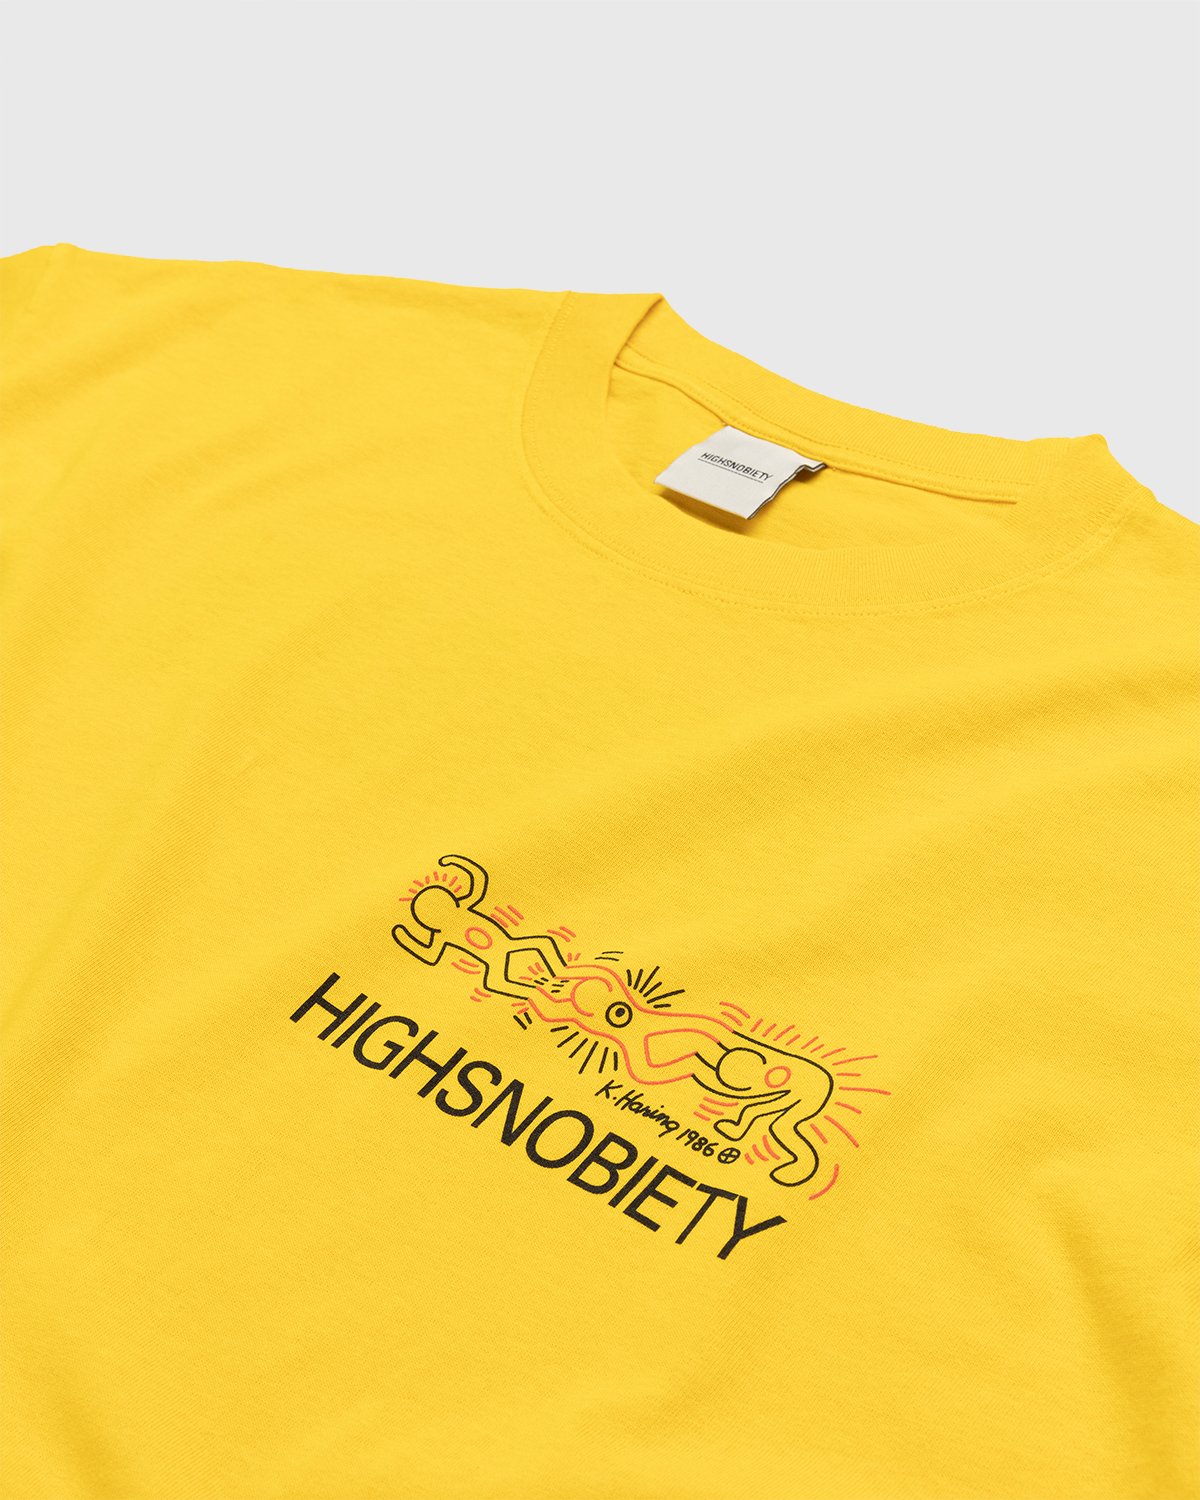 Highsnobiety - Keith Haring Longsleeve Yellow - Clothing - Yellow - Image 3